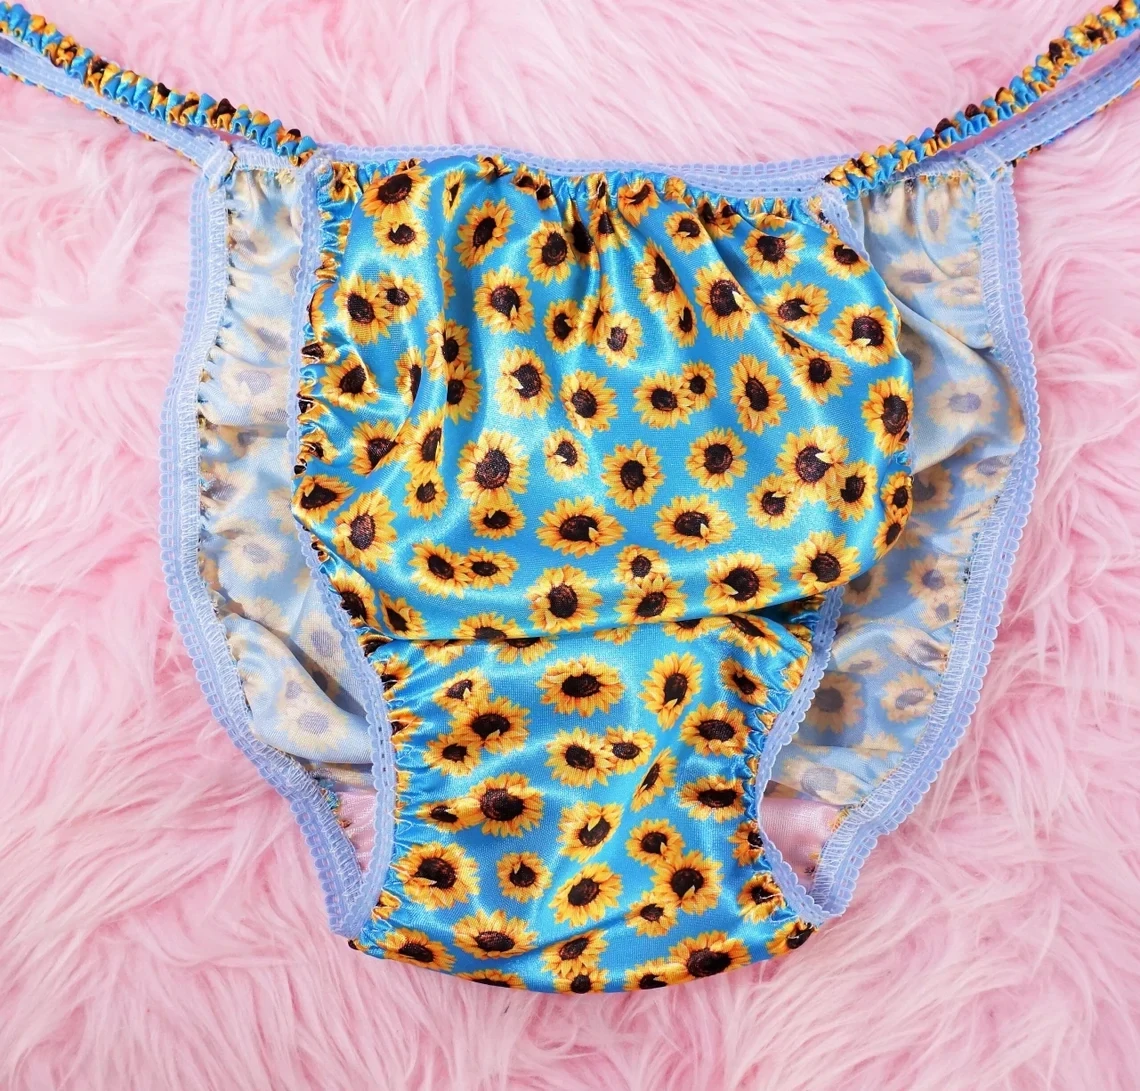 Ania's Poison Sunflower Blue Summer polyester string bikini sissy mens underwear panties S M only